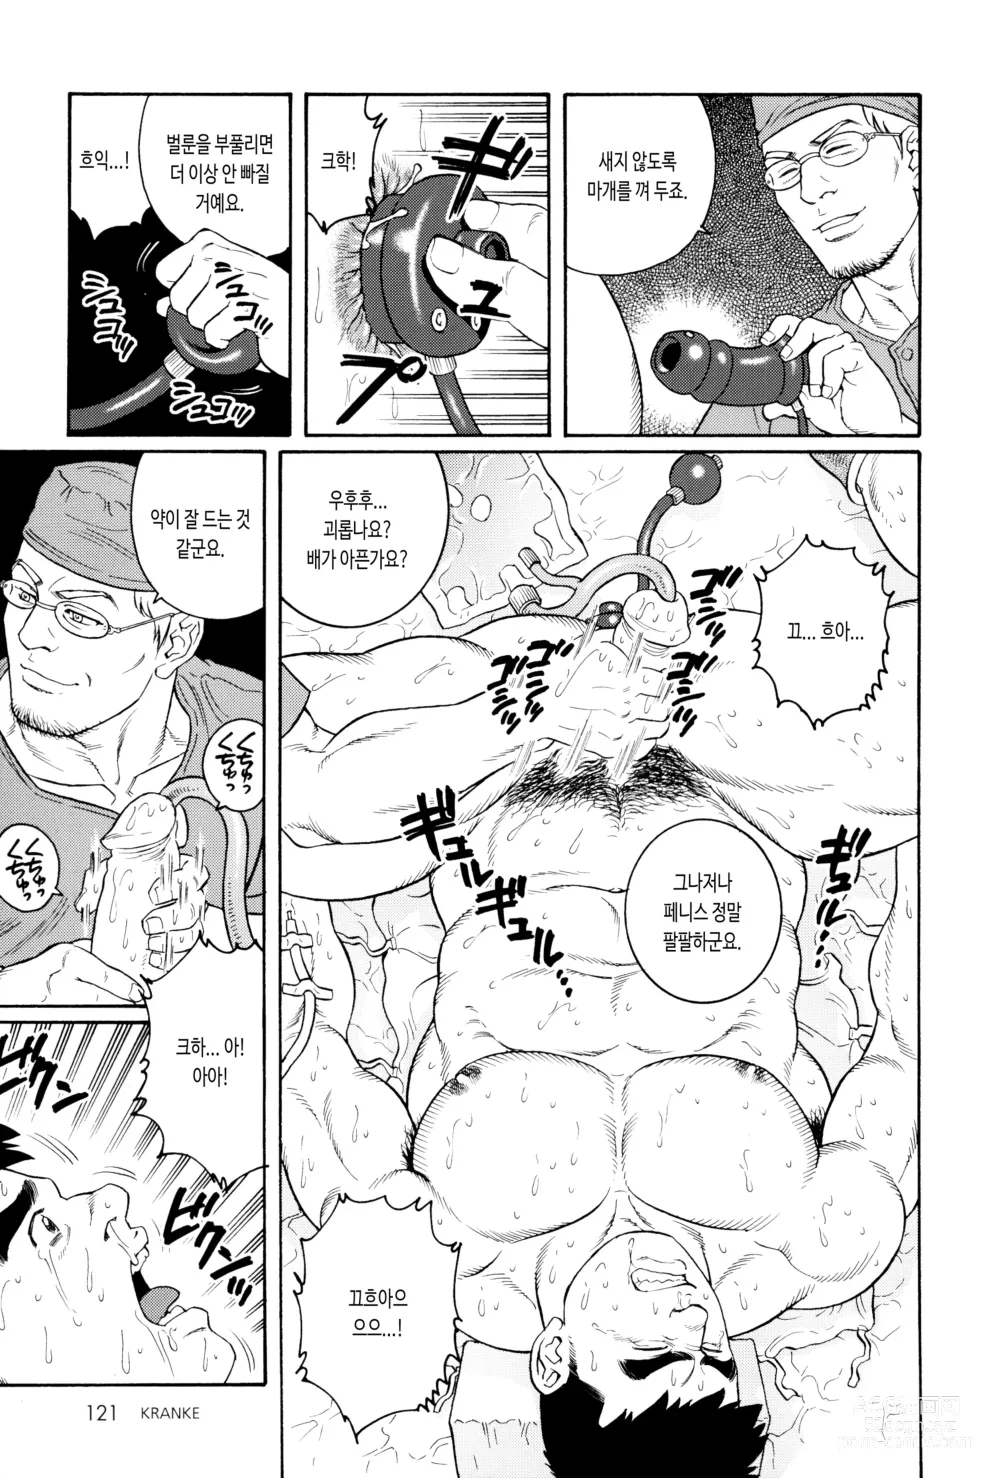 Page 13 of manga KRANKE